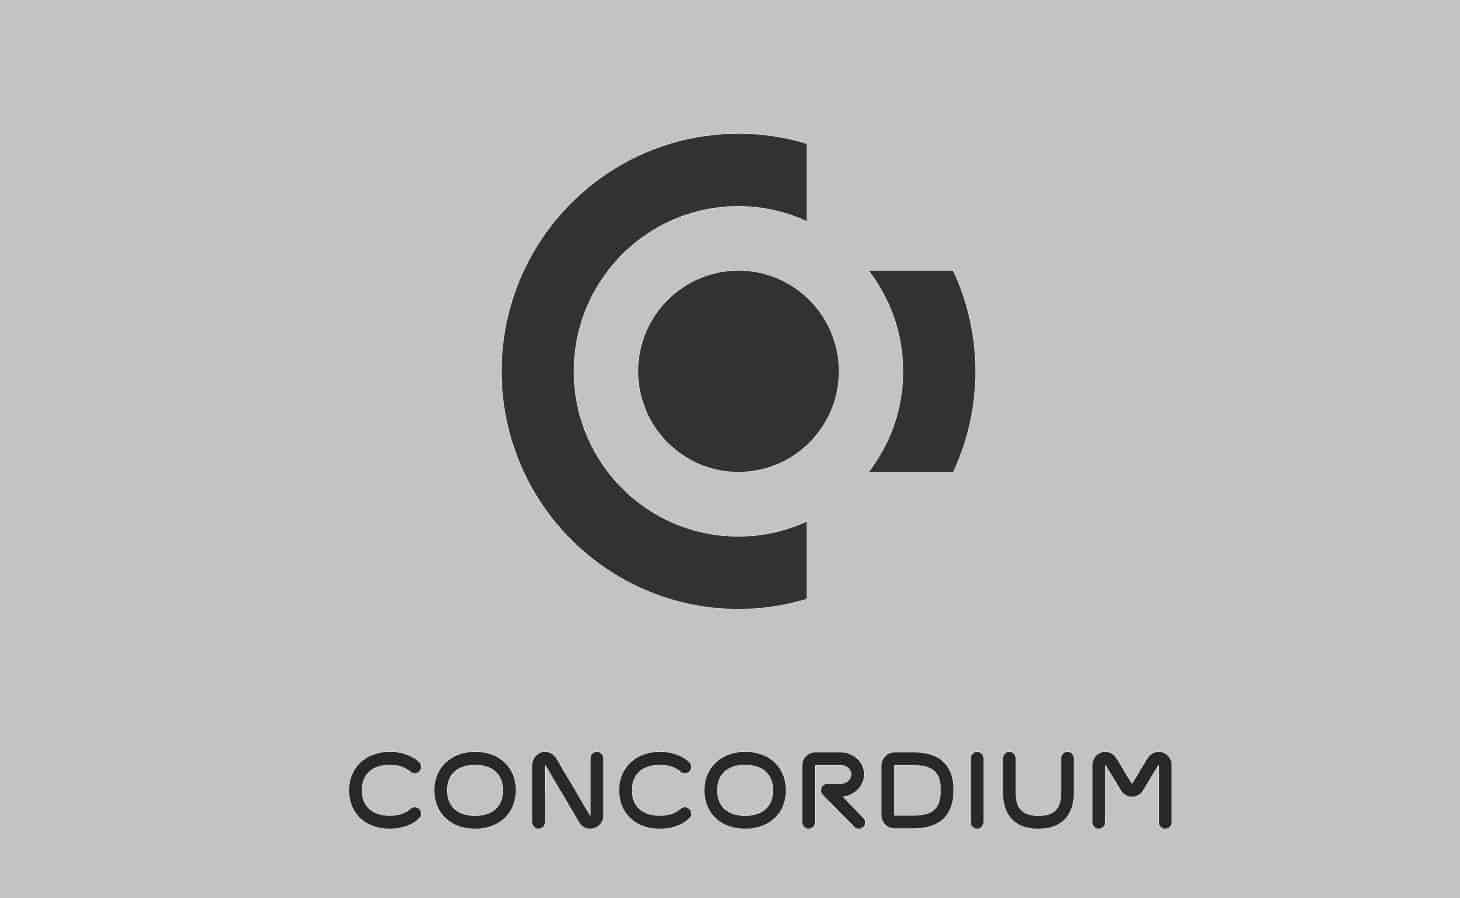 Concordium-concludes-$36-million-fundraising-2-months-ahead-of-mainnet